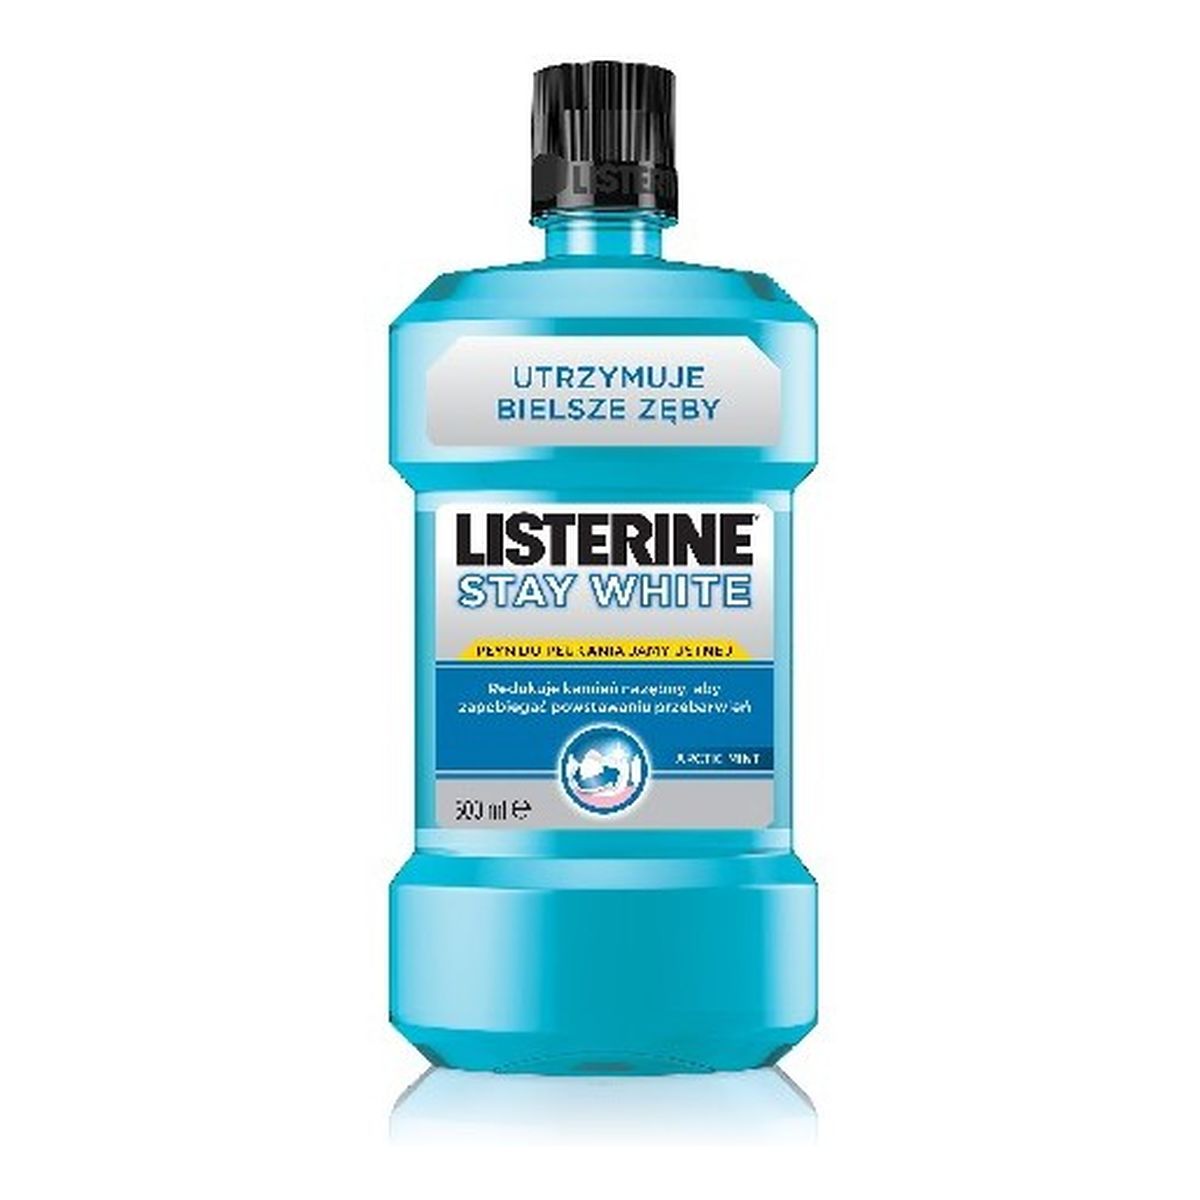 Listerine Stay White Ochronny płyn do płukania jamy ustnej (5+1) 500ml